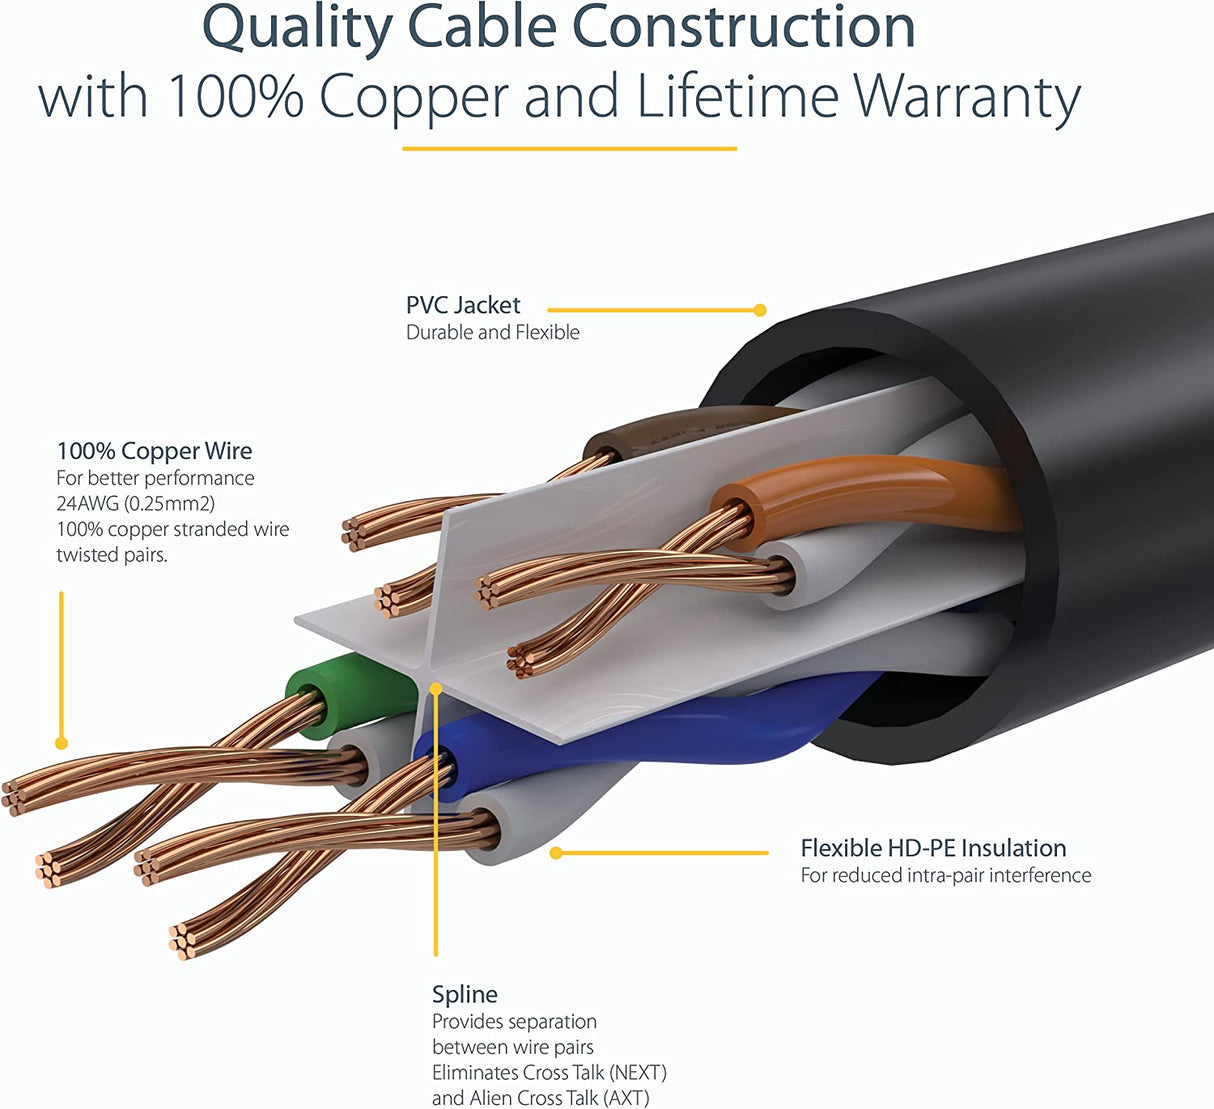 StarTech.com 6 ft. CAT6 Ethernet Cable - 10 Pack - ETL Verified - Black CAT6 Patch Cord - Molded RJ45 Connectors - 24 AWG Copper Wire ? UTP Cable (C6PATCH6BK10PK) Black 6 ft / 1.82 m 10 Pack